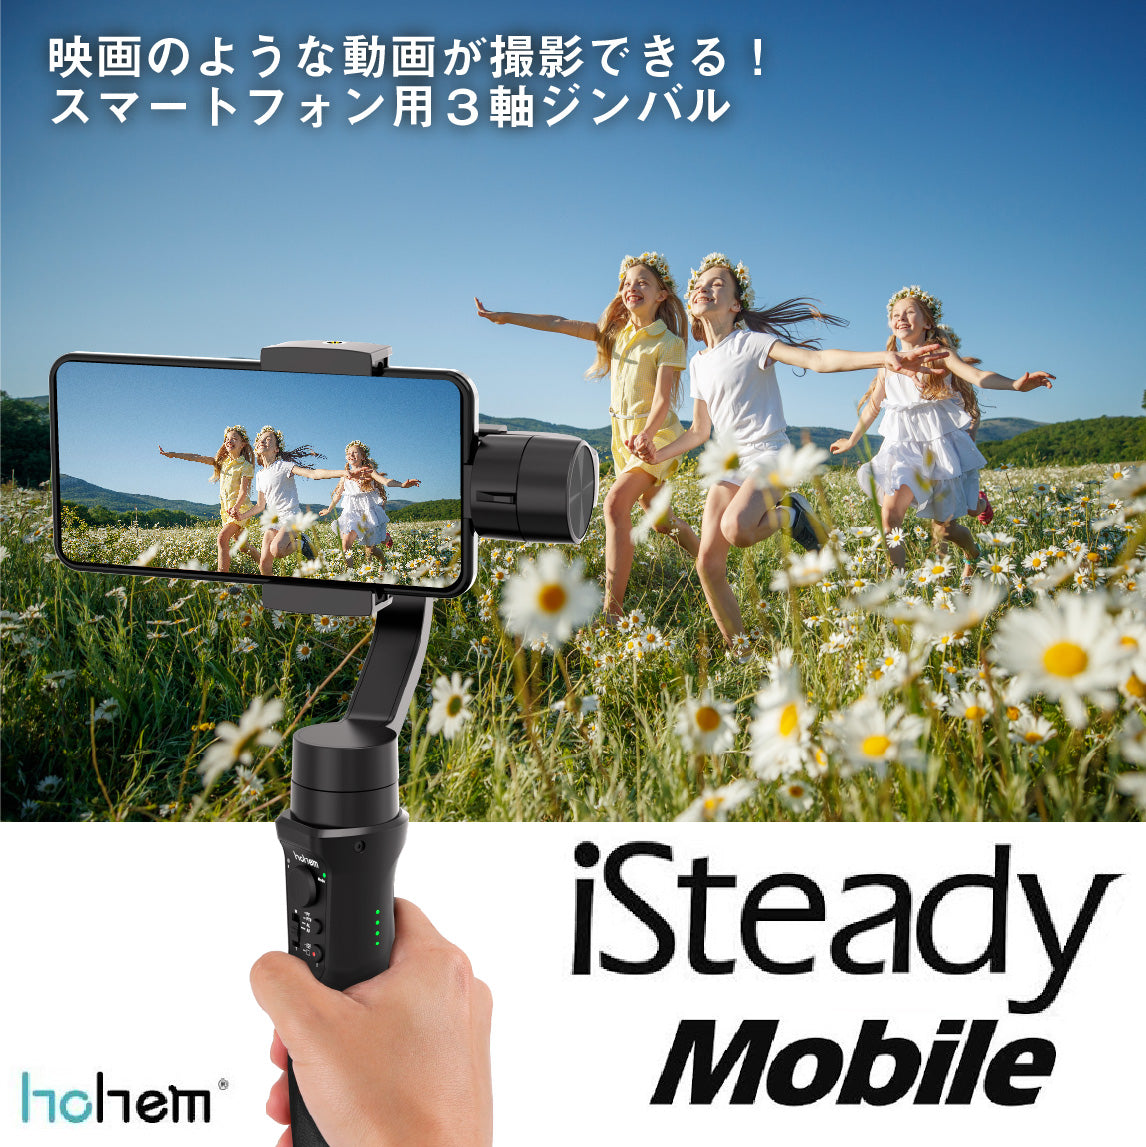 Hohem isteady mobile+ スマホ動画撮影用ジンバル (美品)